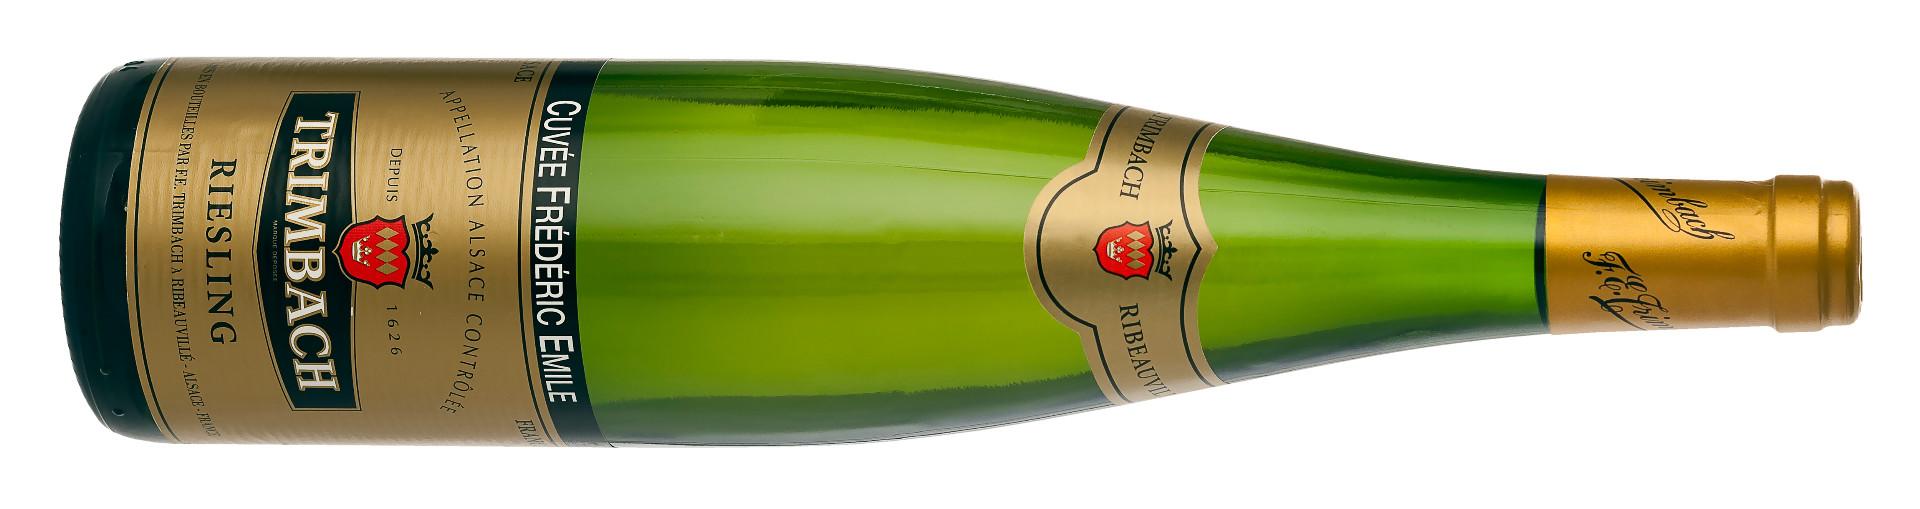  789501 Bestillingsutvalget/ lokale vinmonopol  Poeng 91 Land/region: Frankrike, Alsace Druesort: Riesling  Alkohol: 13 % Sukkerinnhold: <3 g/l